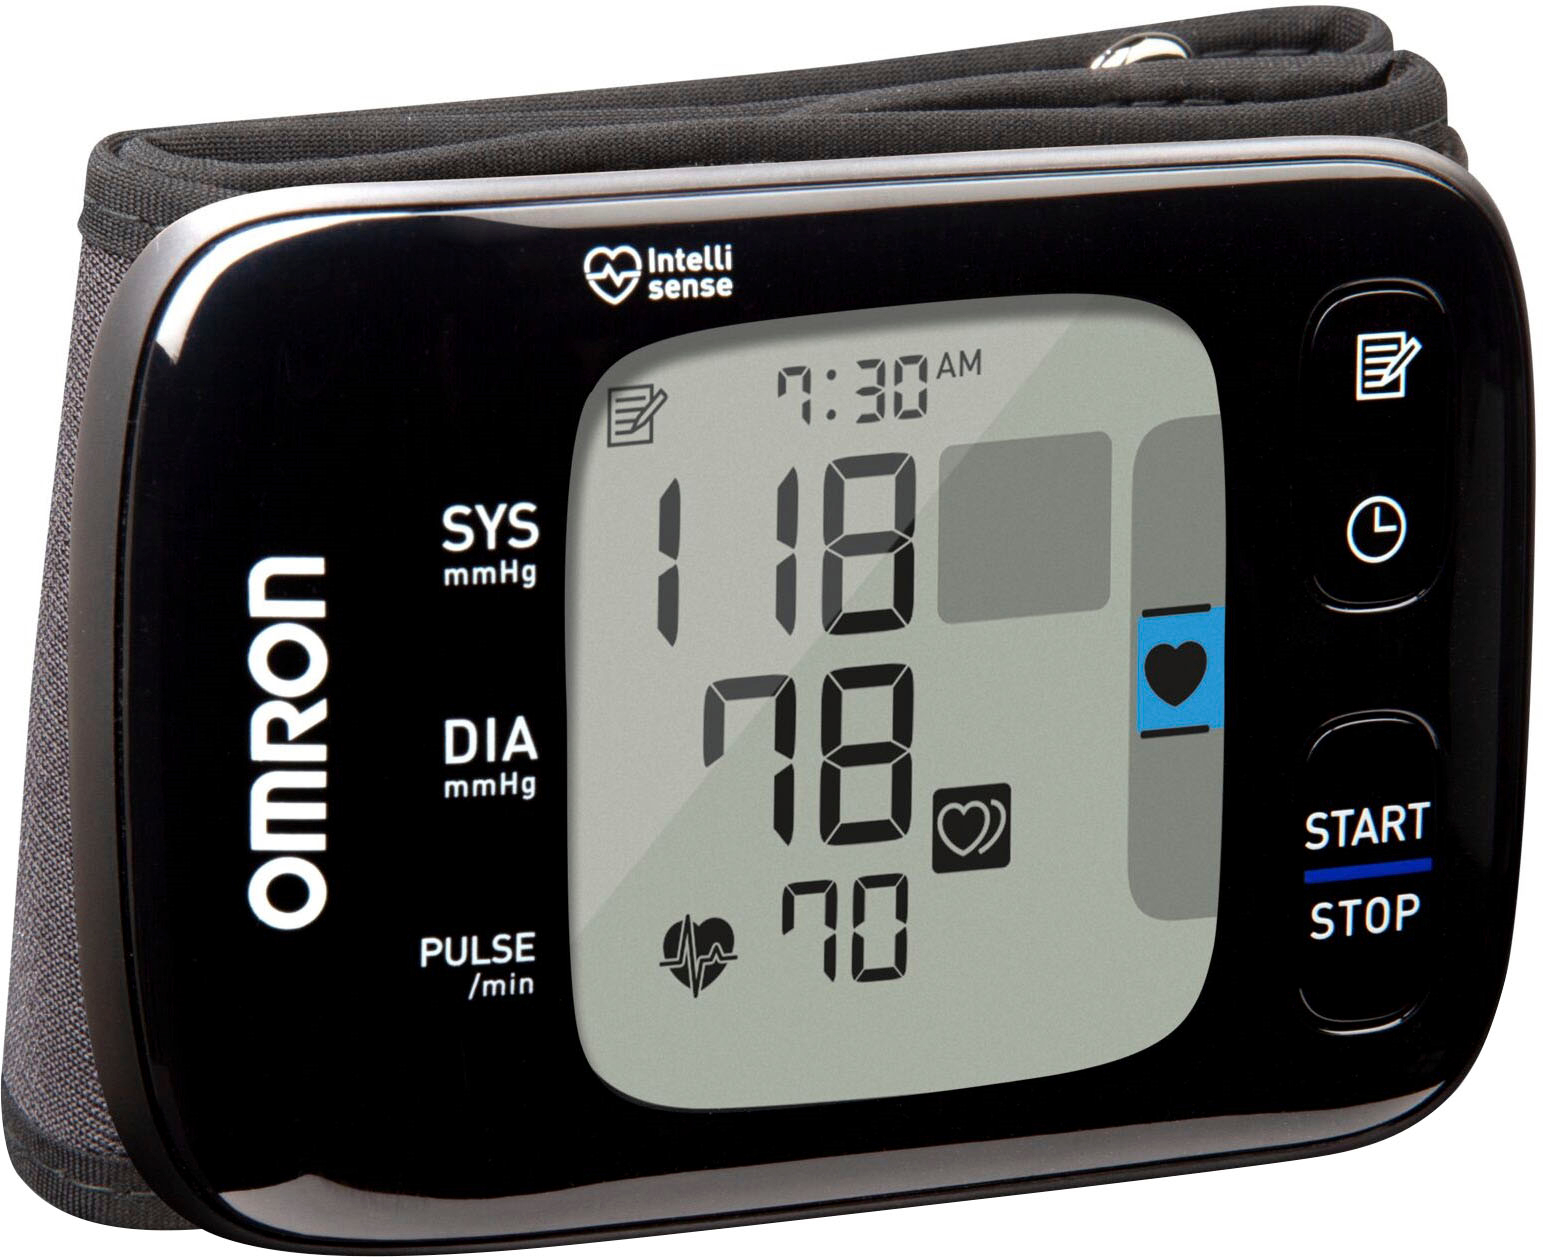 Omron 7 Series Digital Wireless Upper Arm Blood Pressure Monitor, 1 ct -  Kroger